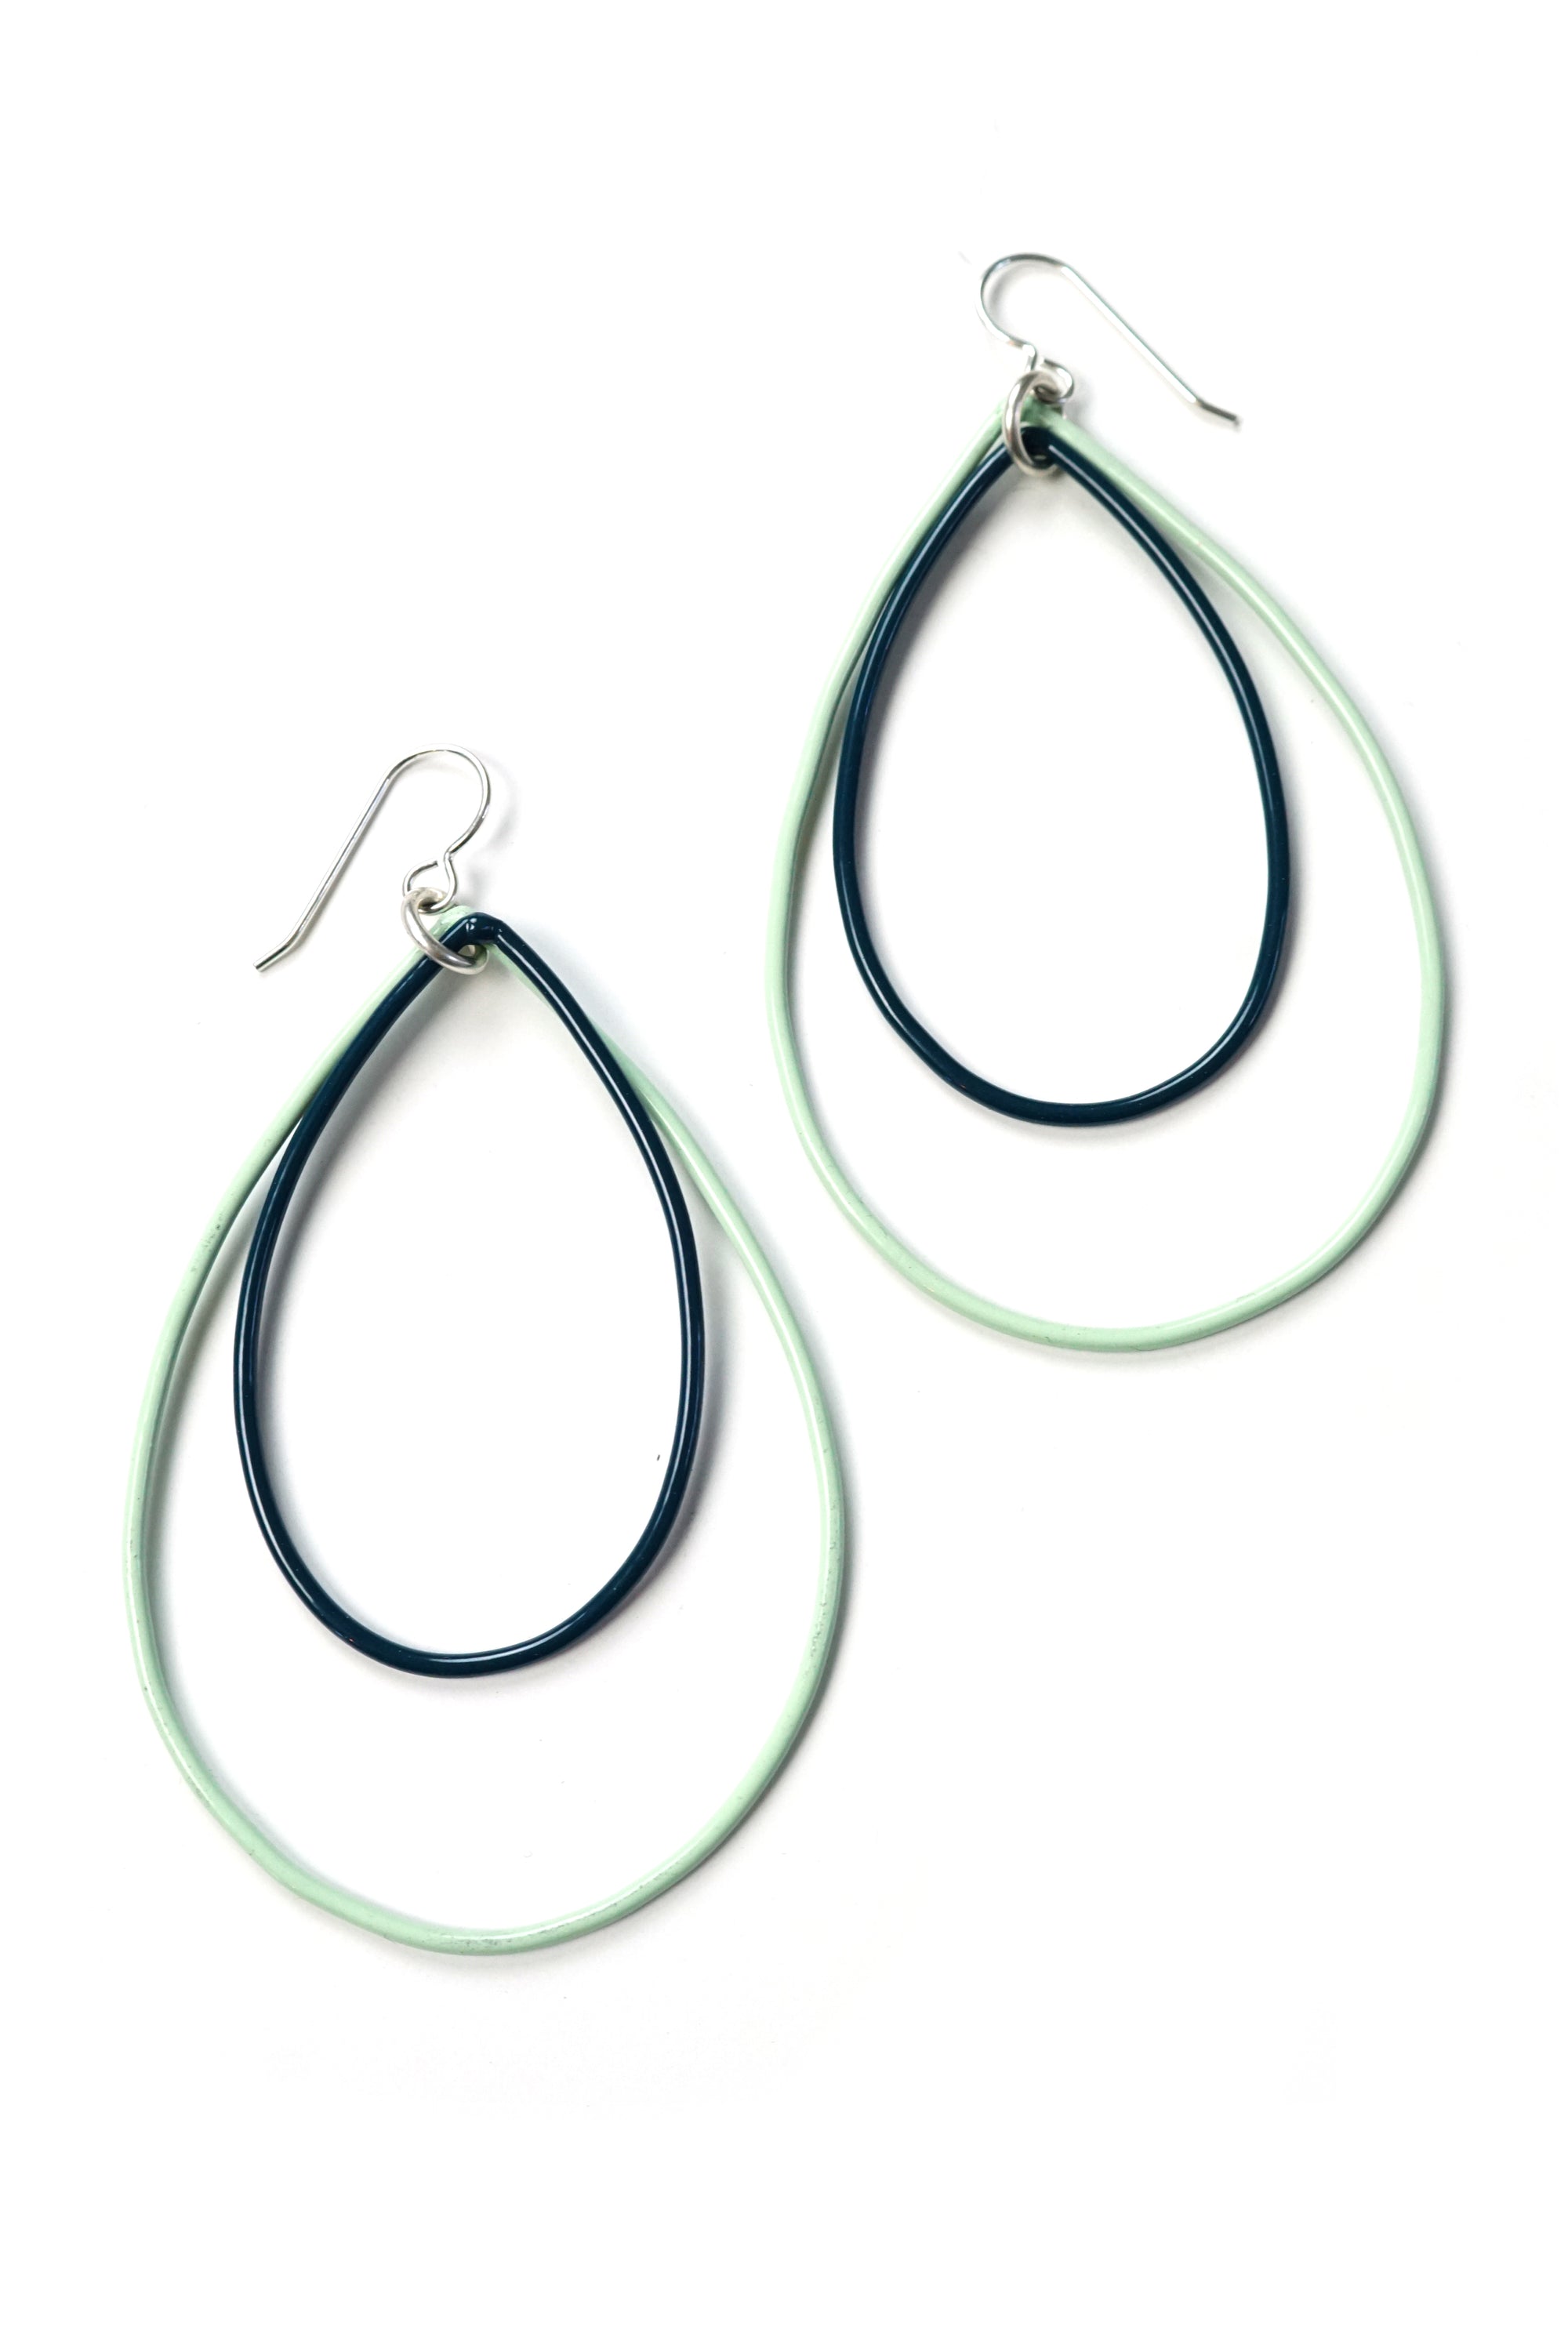 Large Eva earrings in Soft Mint and Deep Ocean